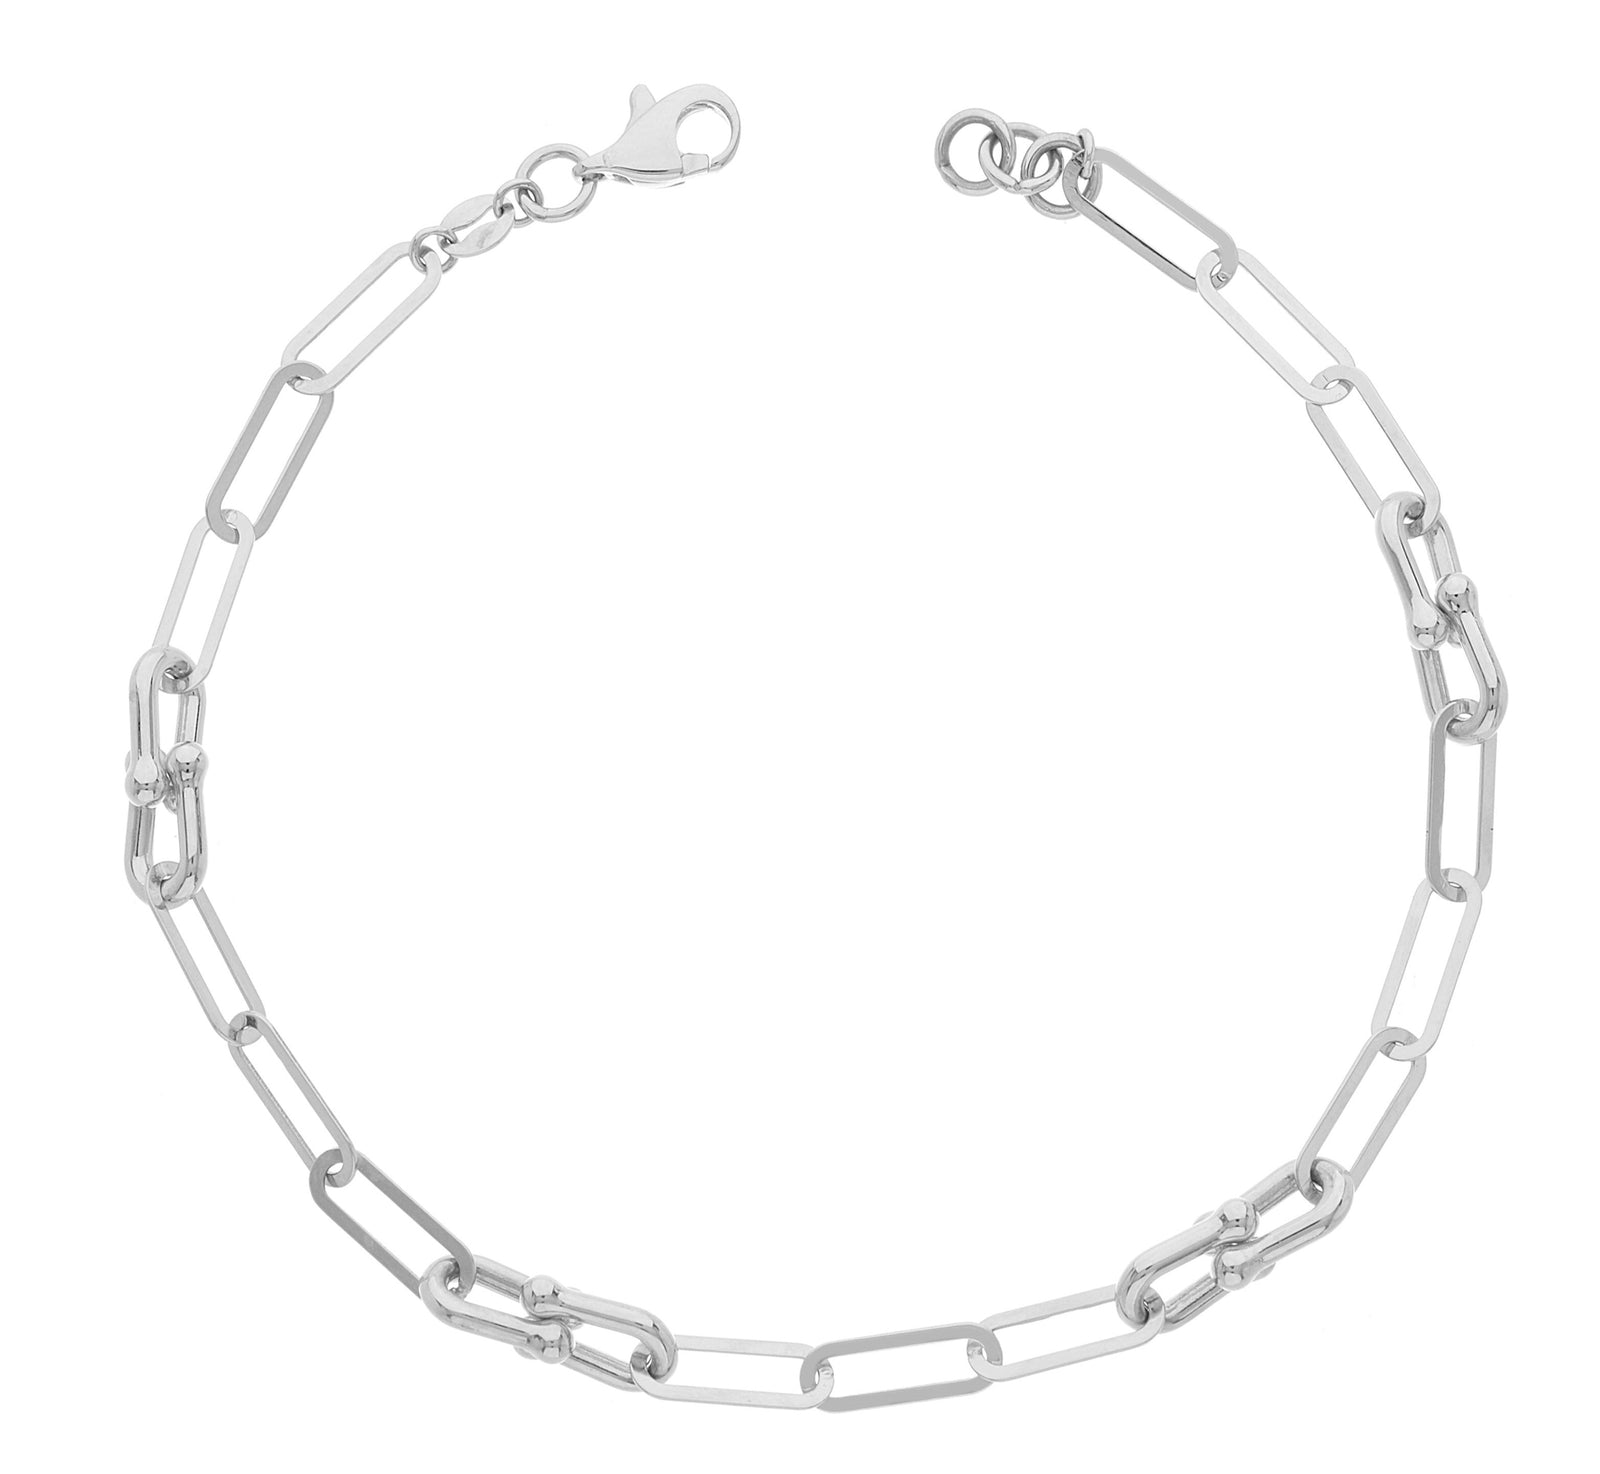 9ct white gold fancy chain link bracelet